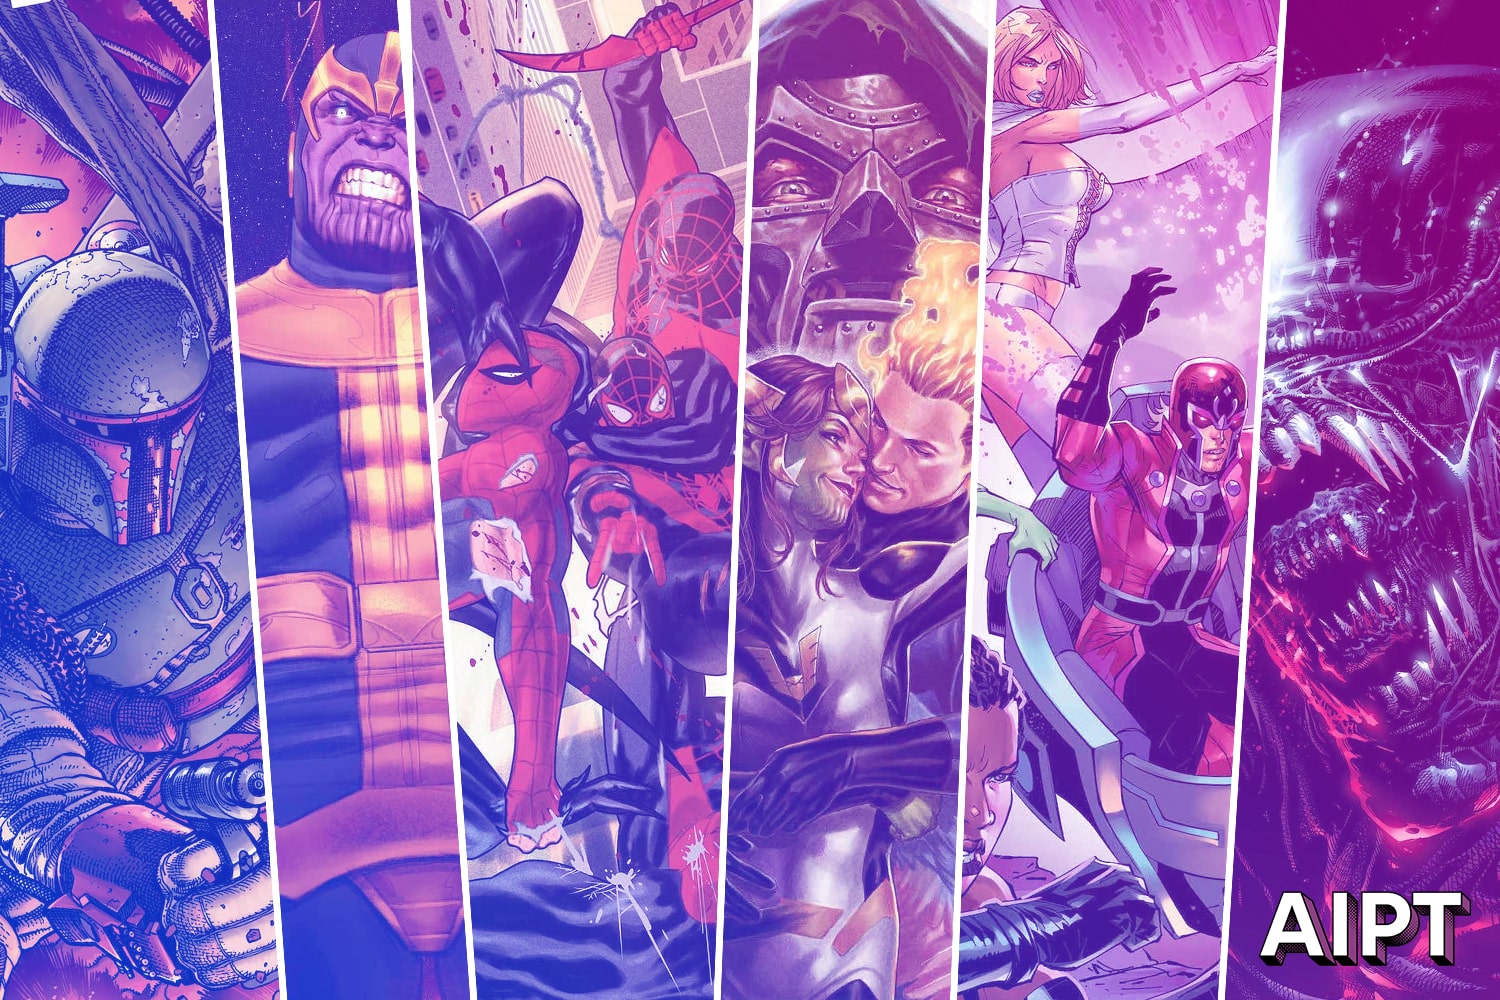 May 2021 Marvel Comics solicitations: Heroes Reborn, Boba Fett event, and more